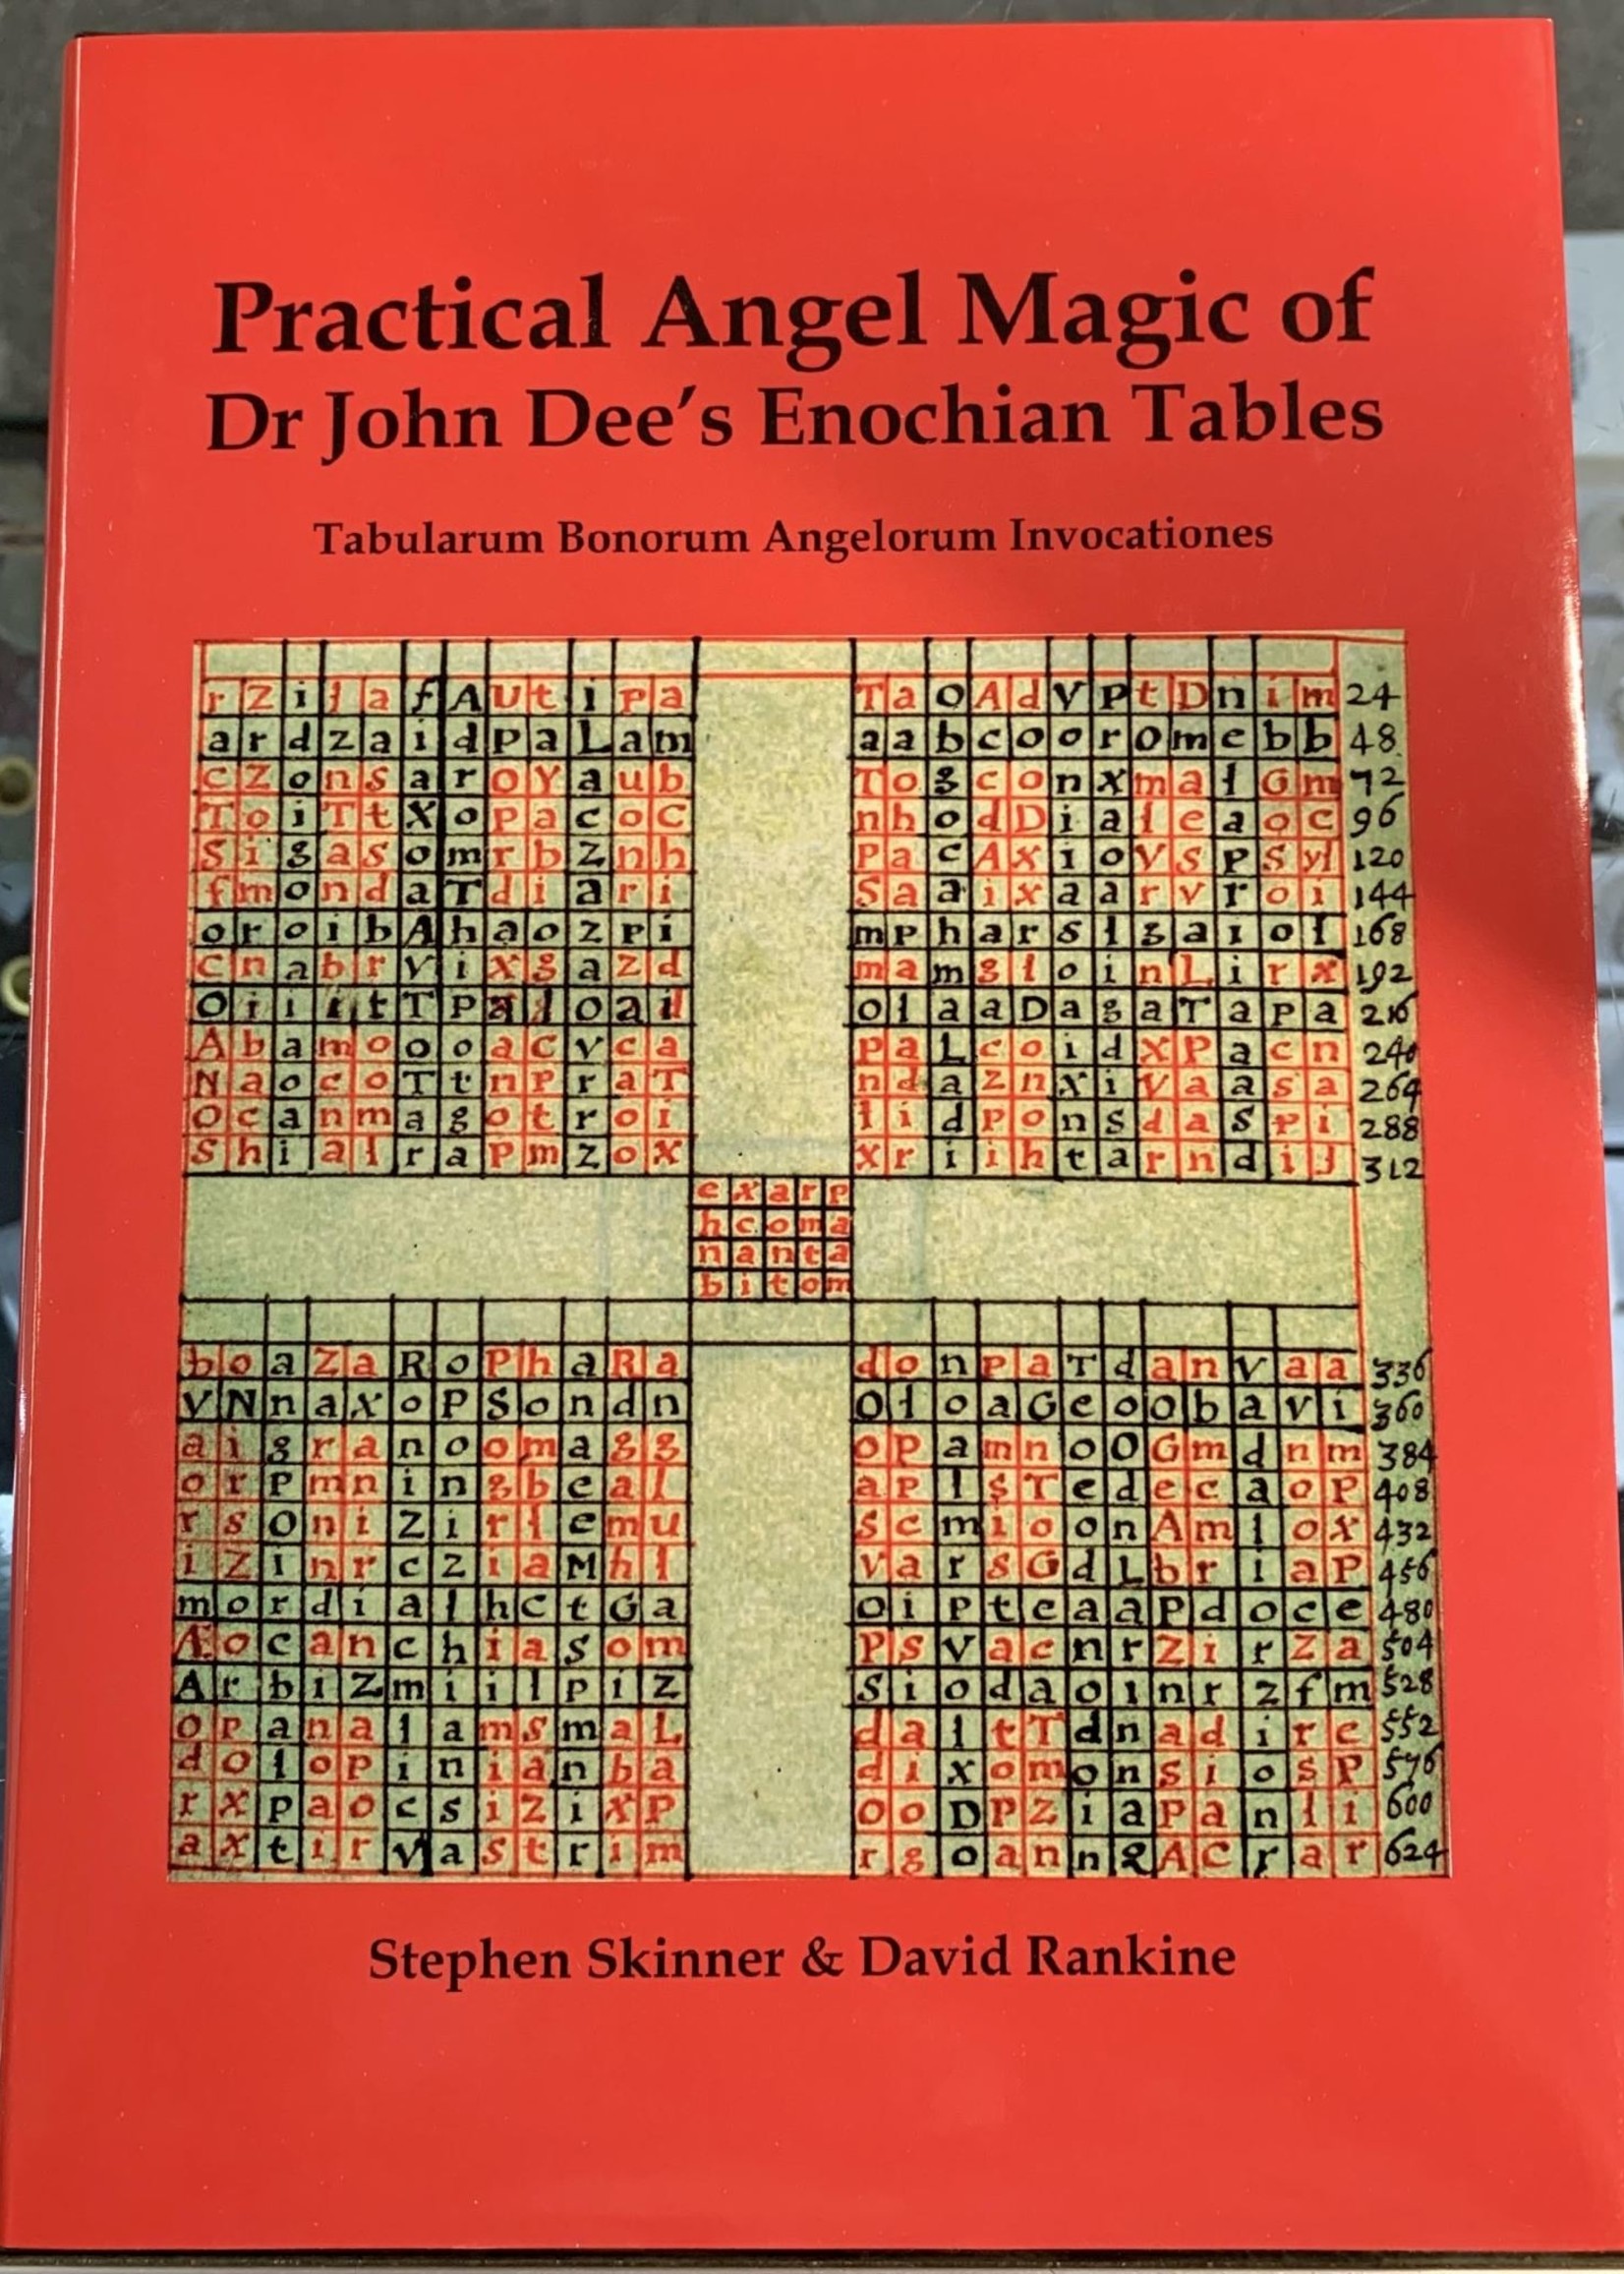 Practical Angel Magic of Dr. John Dee's Enochian Tables - BY DR STEPHEN SKINNER, DAVID RANKINE